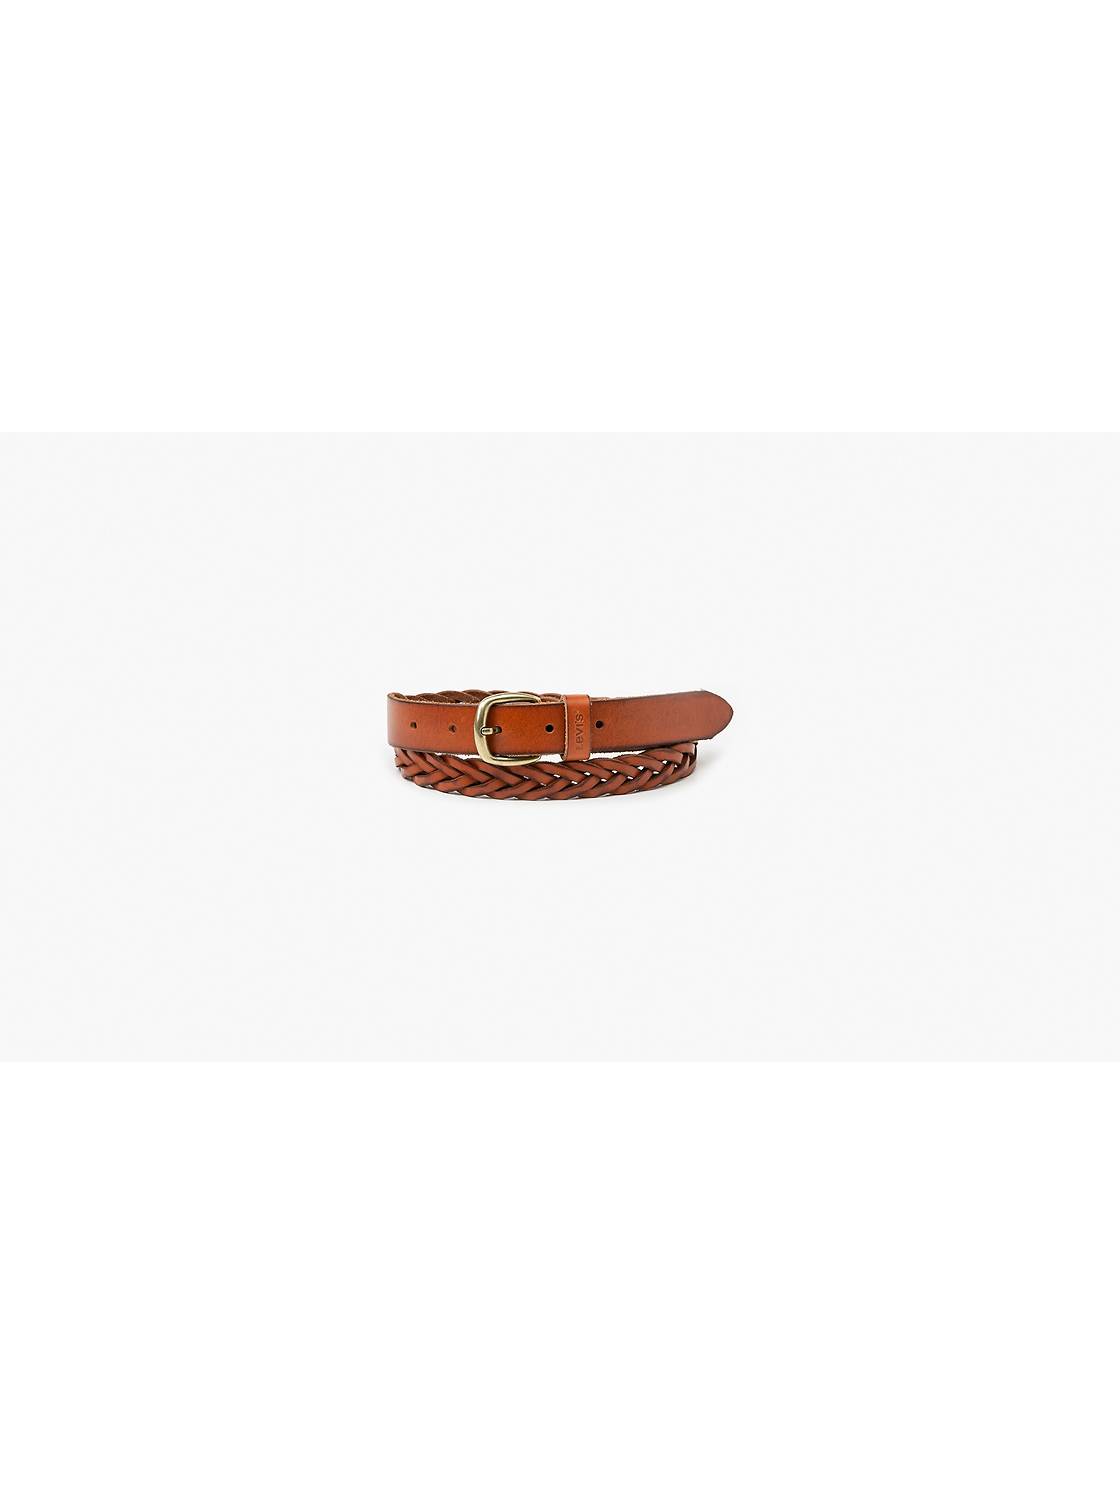 Leather Braided Belt 1